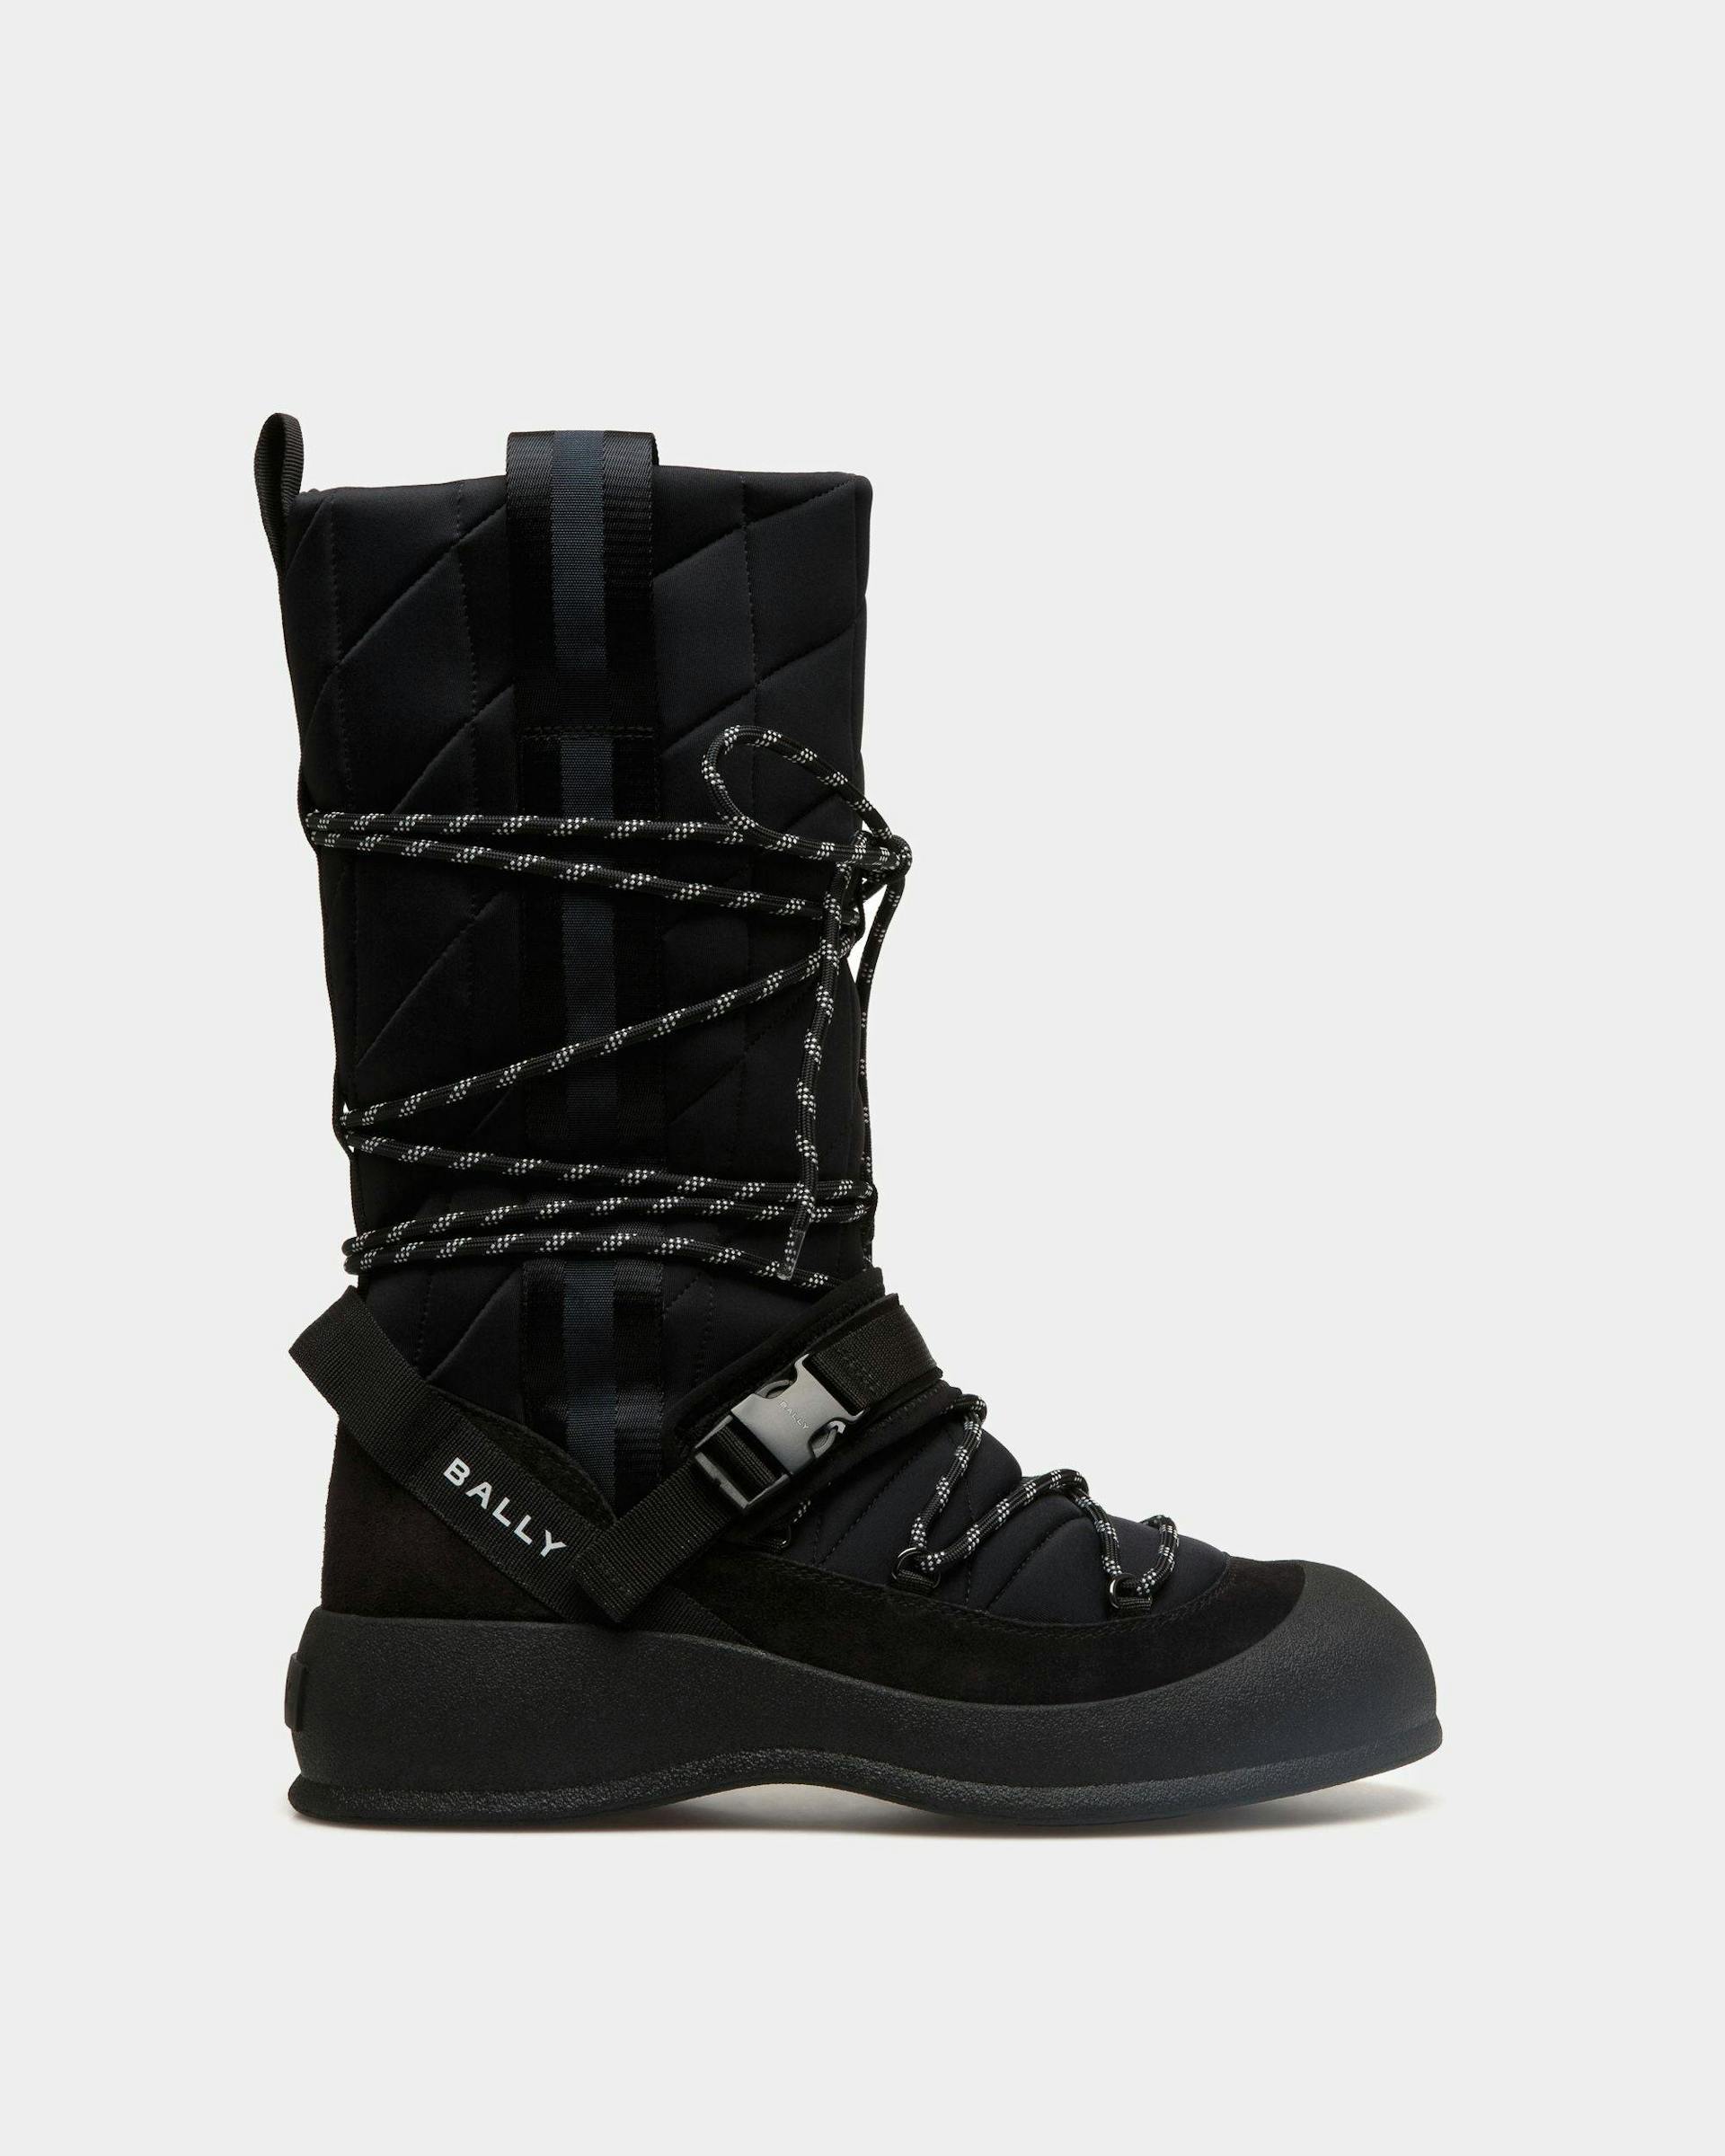 Men's Frei Lace-Up Boot In Black Nylon | Bally | Still Life Side